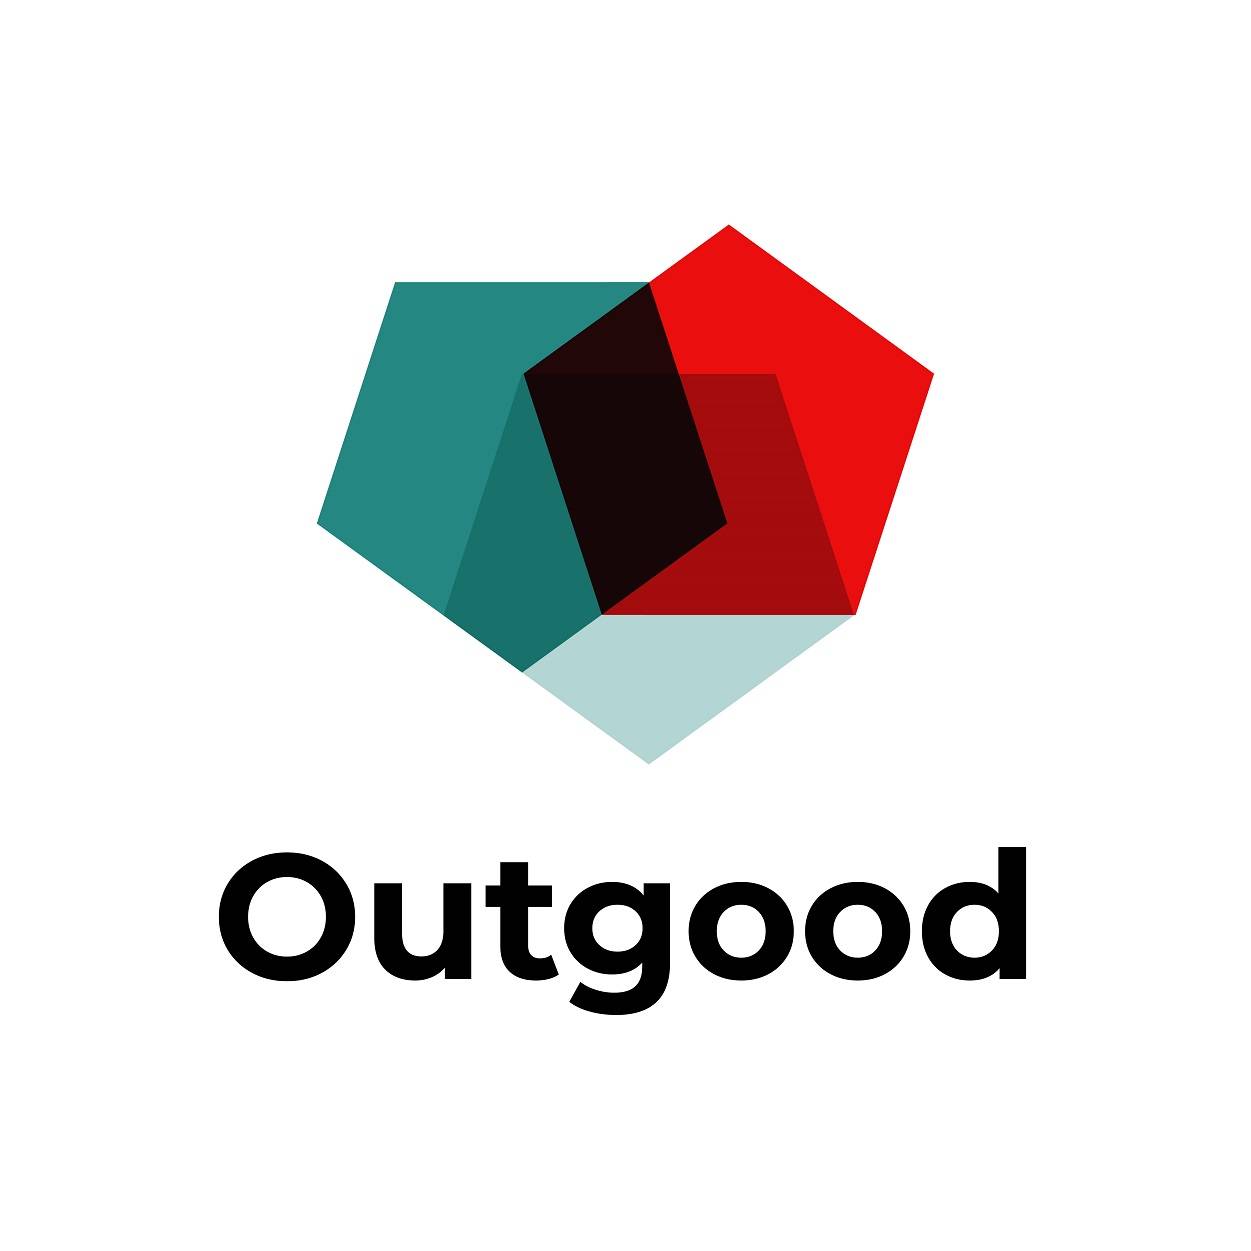 Outgood geometric shape logo design